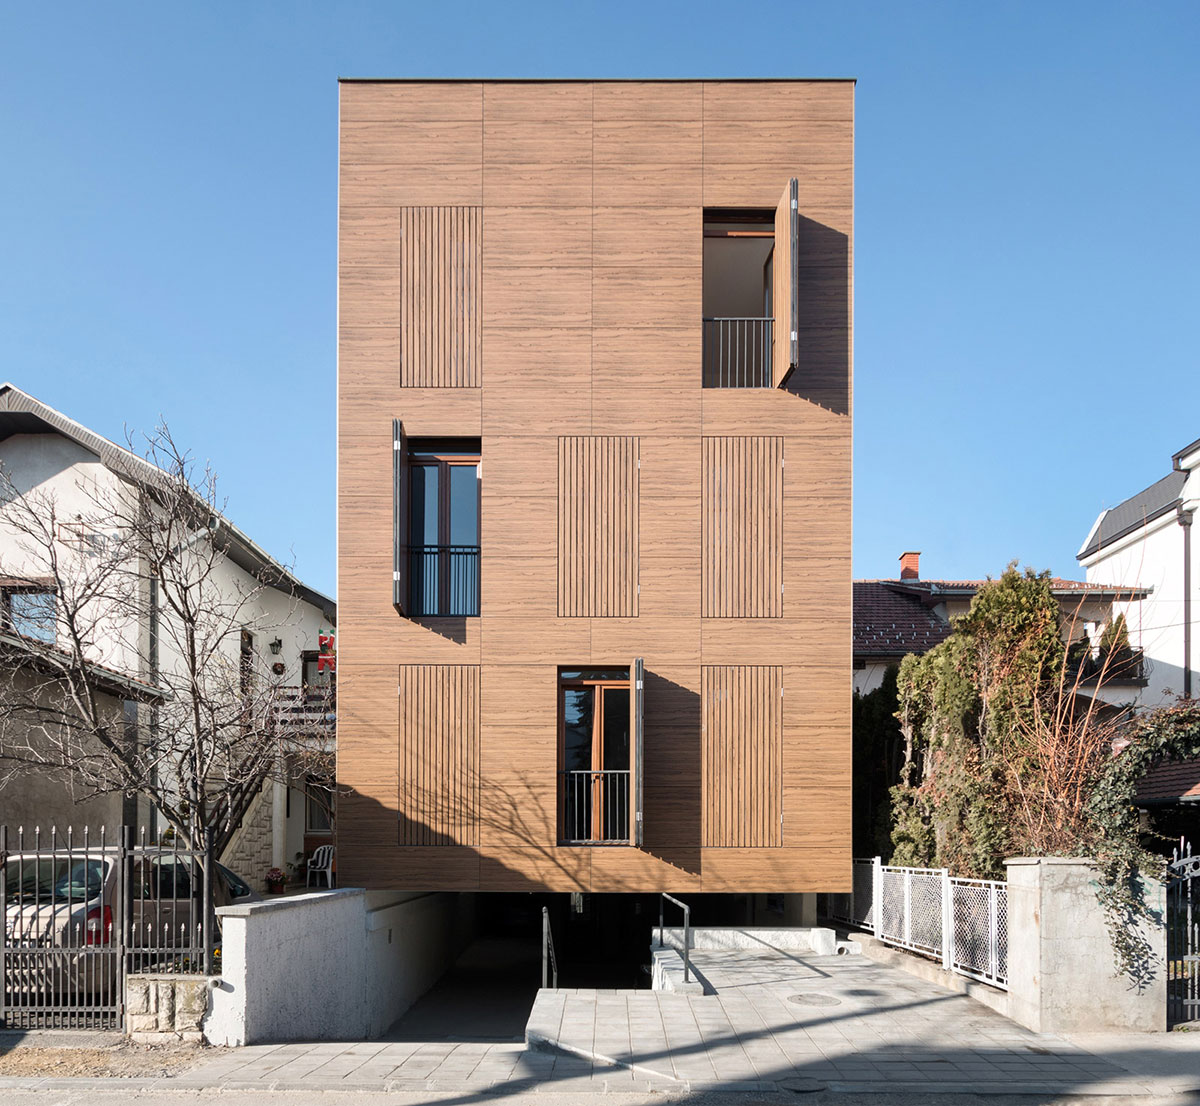 2017_Salon-arhitekture_2-1a-Nagrada-ARHITEKTURA-Simovici-N1-Housing